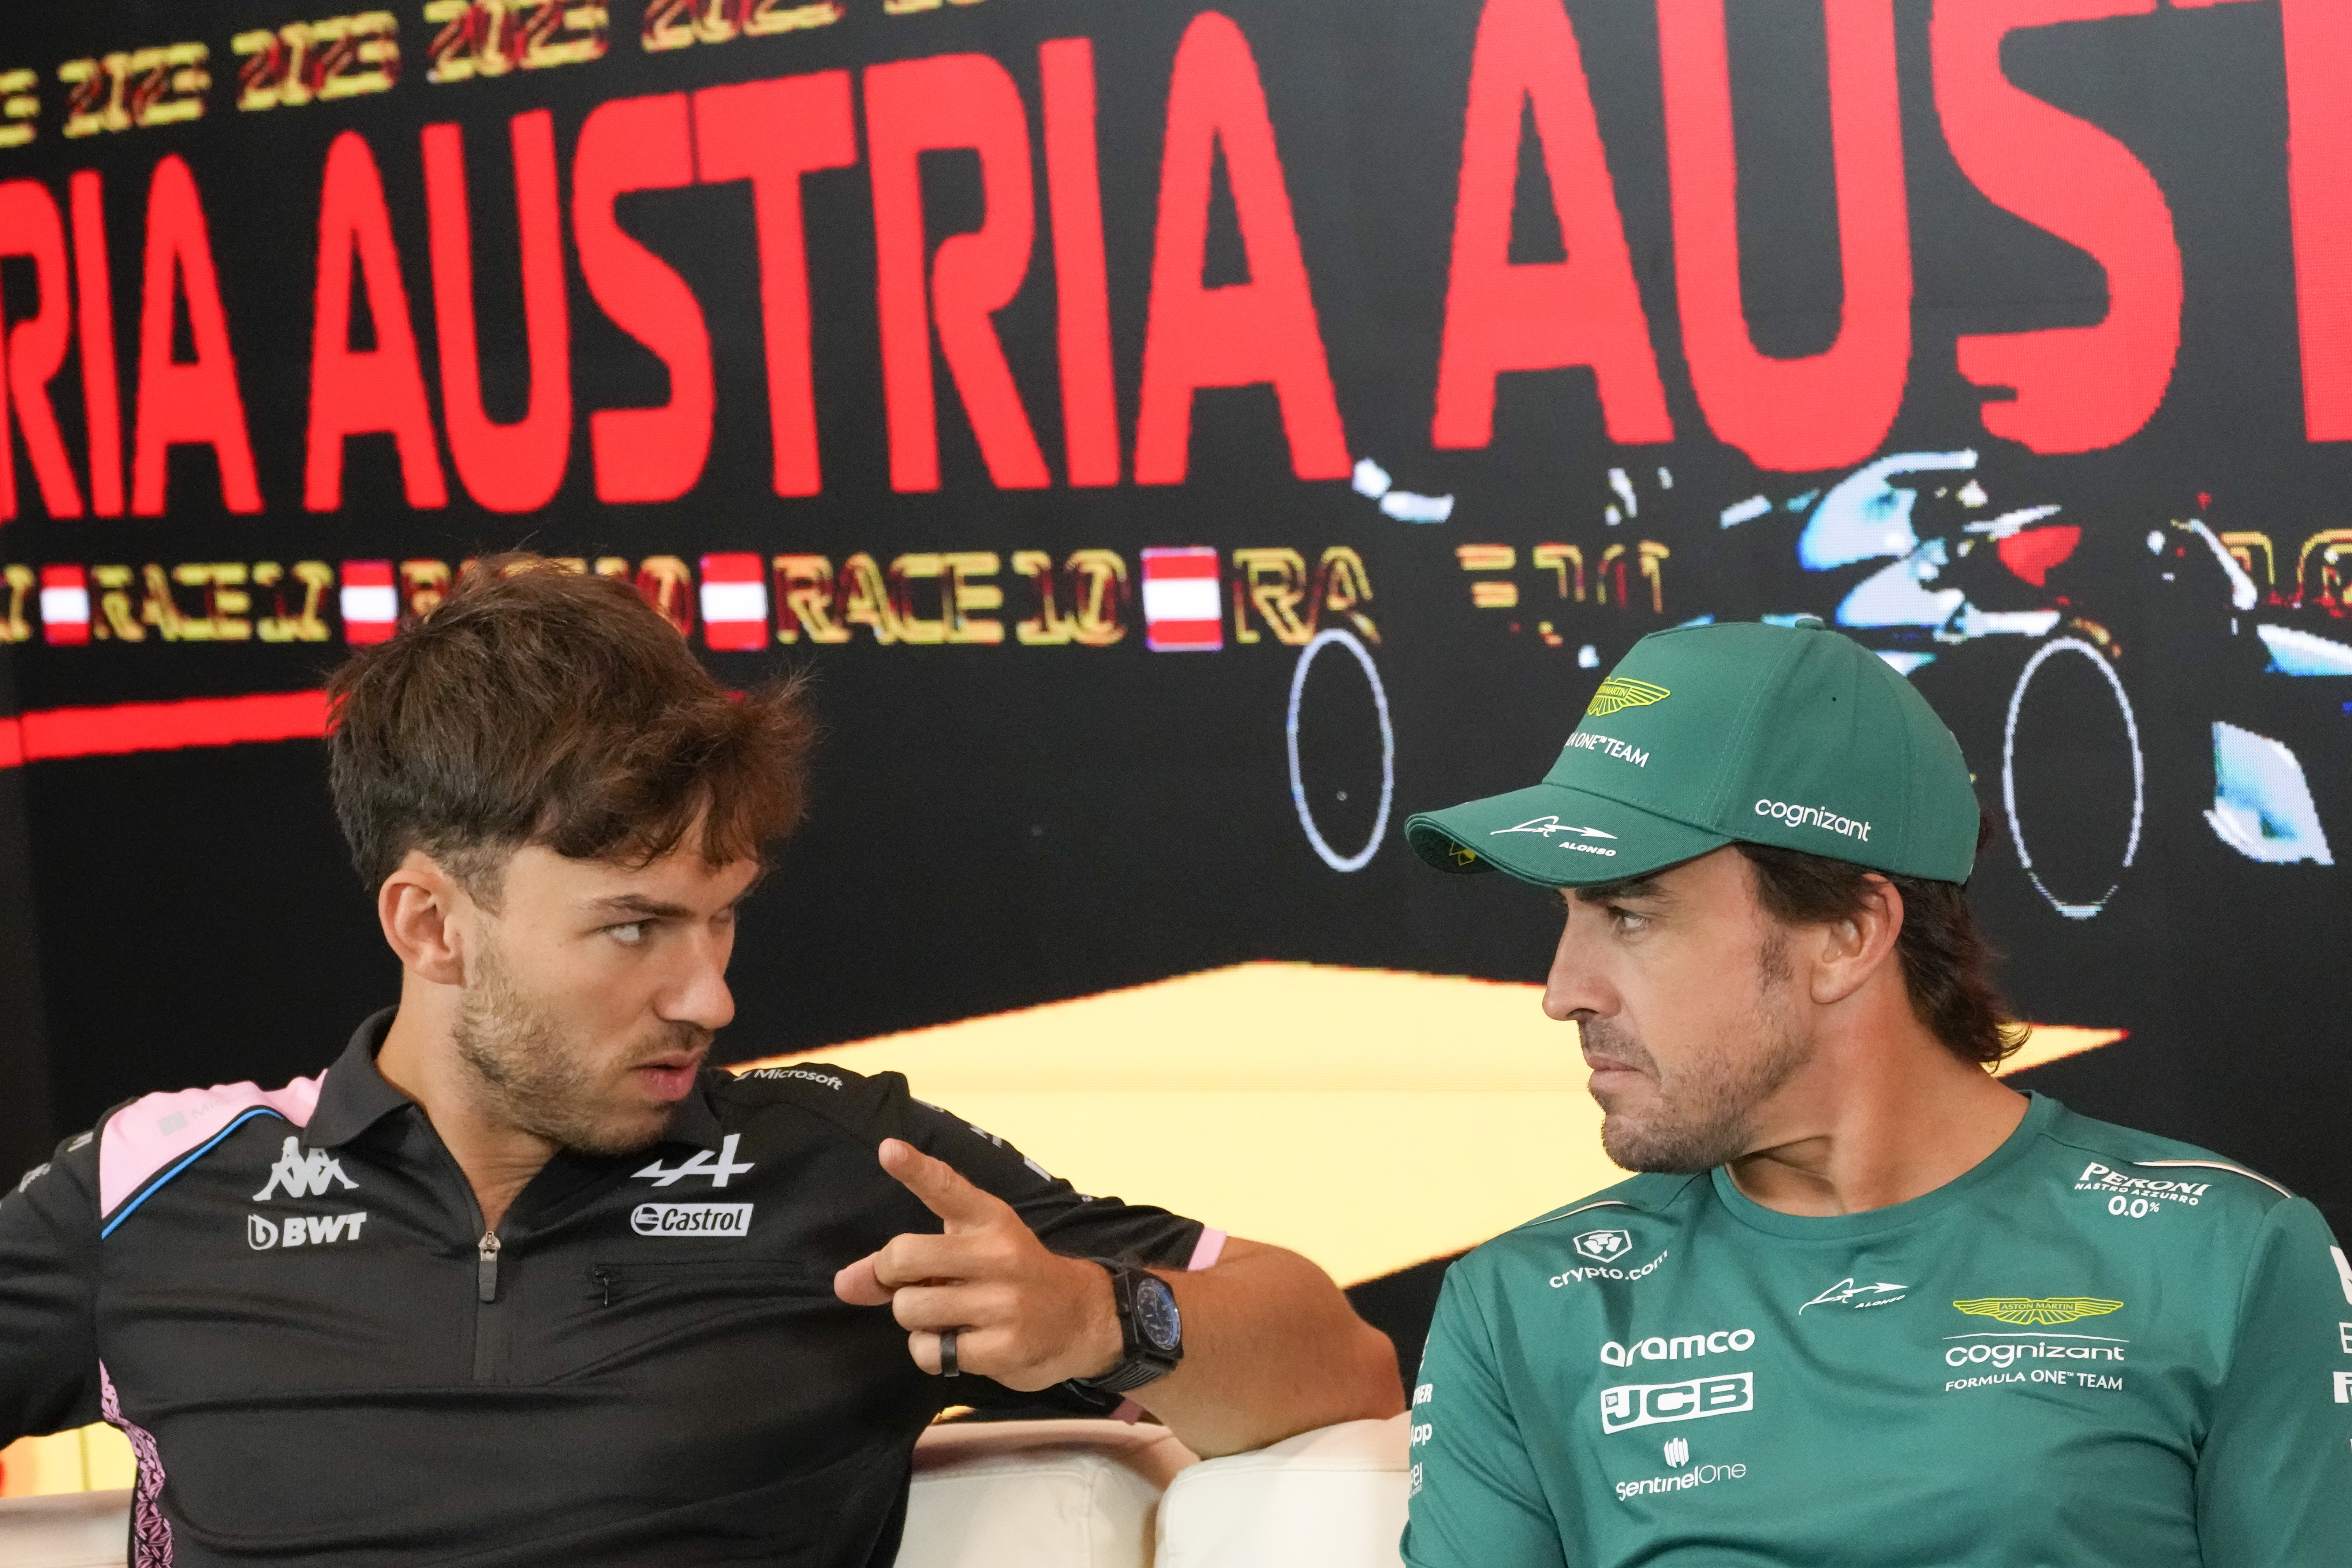 F1 Austria Qualifying Free live stream, TV schedule, how to watch